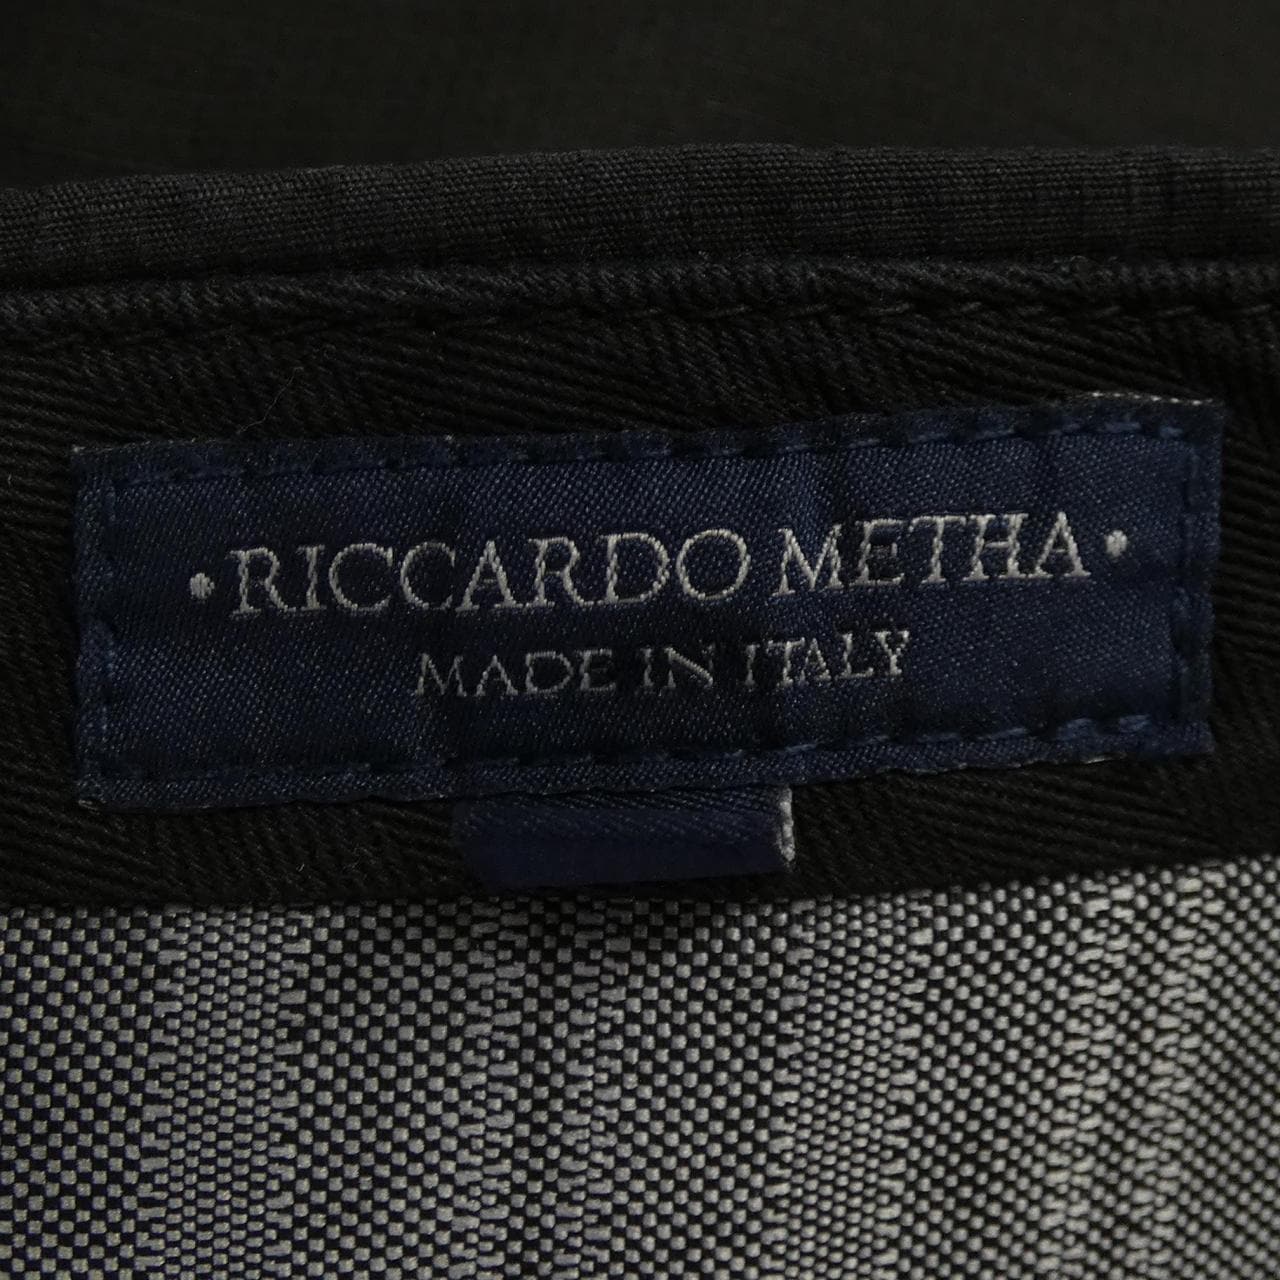 RICCARDO METHA裤子